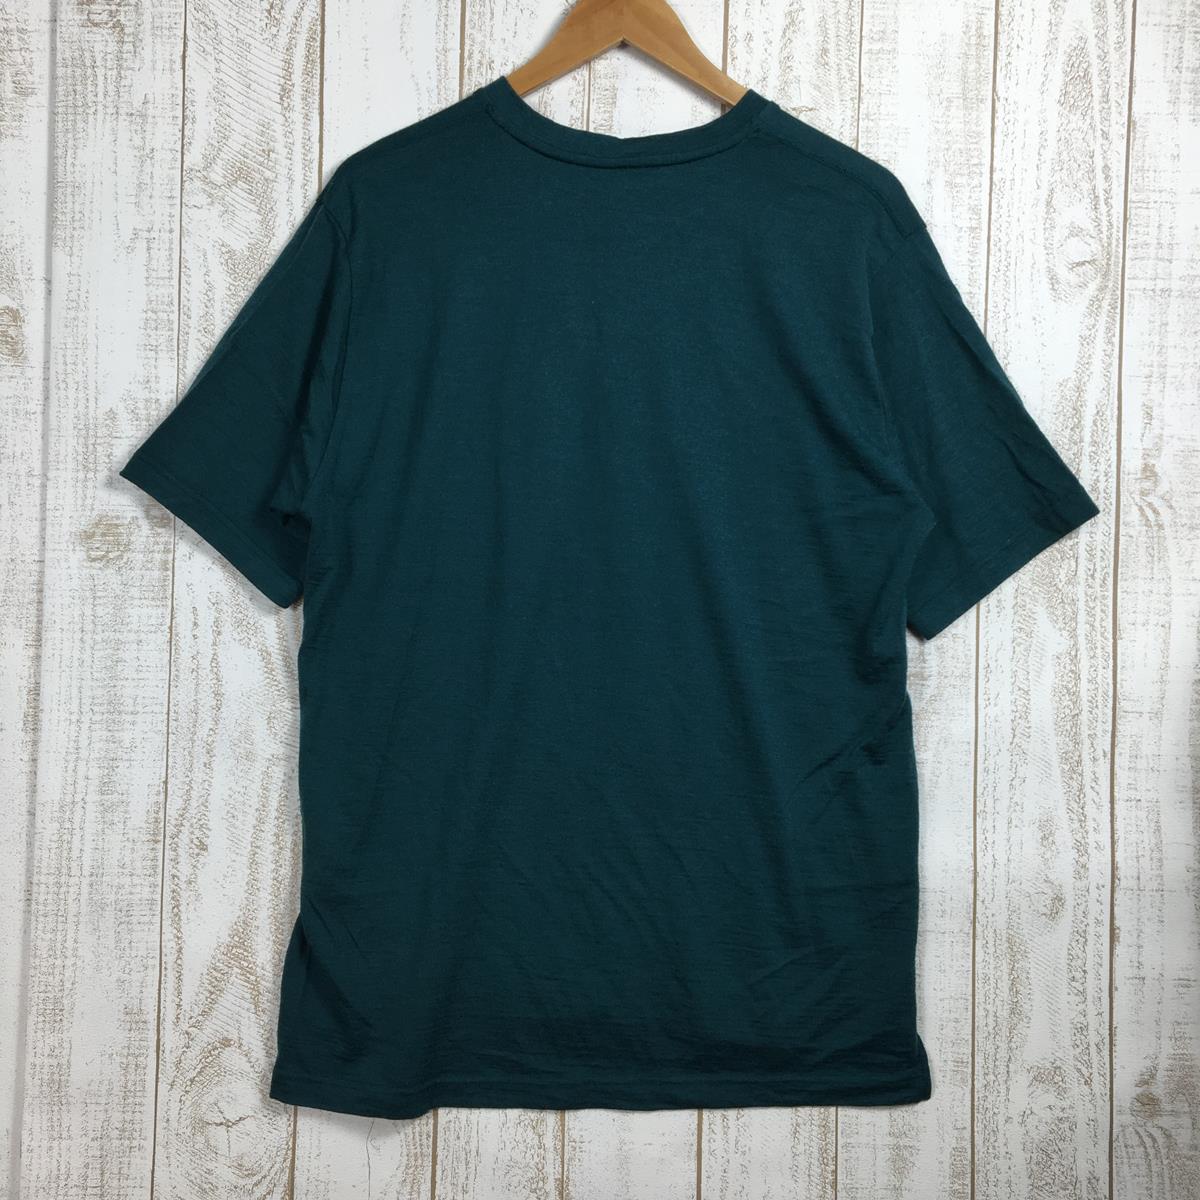 【MEN's XL】 山と道 メリノ ヘンリー Tシャツ Merino Henry T-Shirt メリノウール 生産終了モデル 入手困難 YAMATOMICHI グリーン系